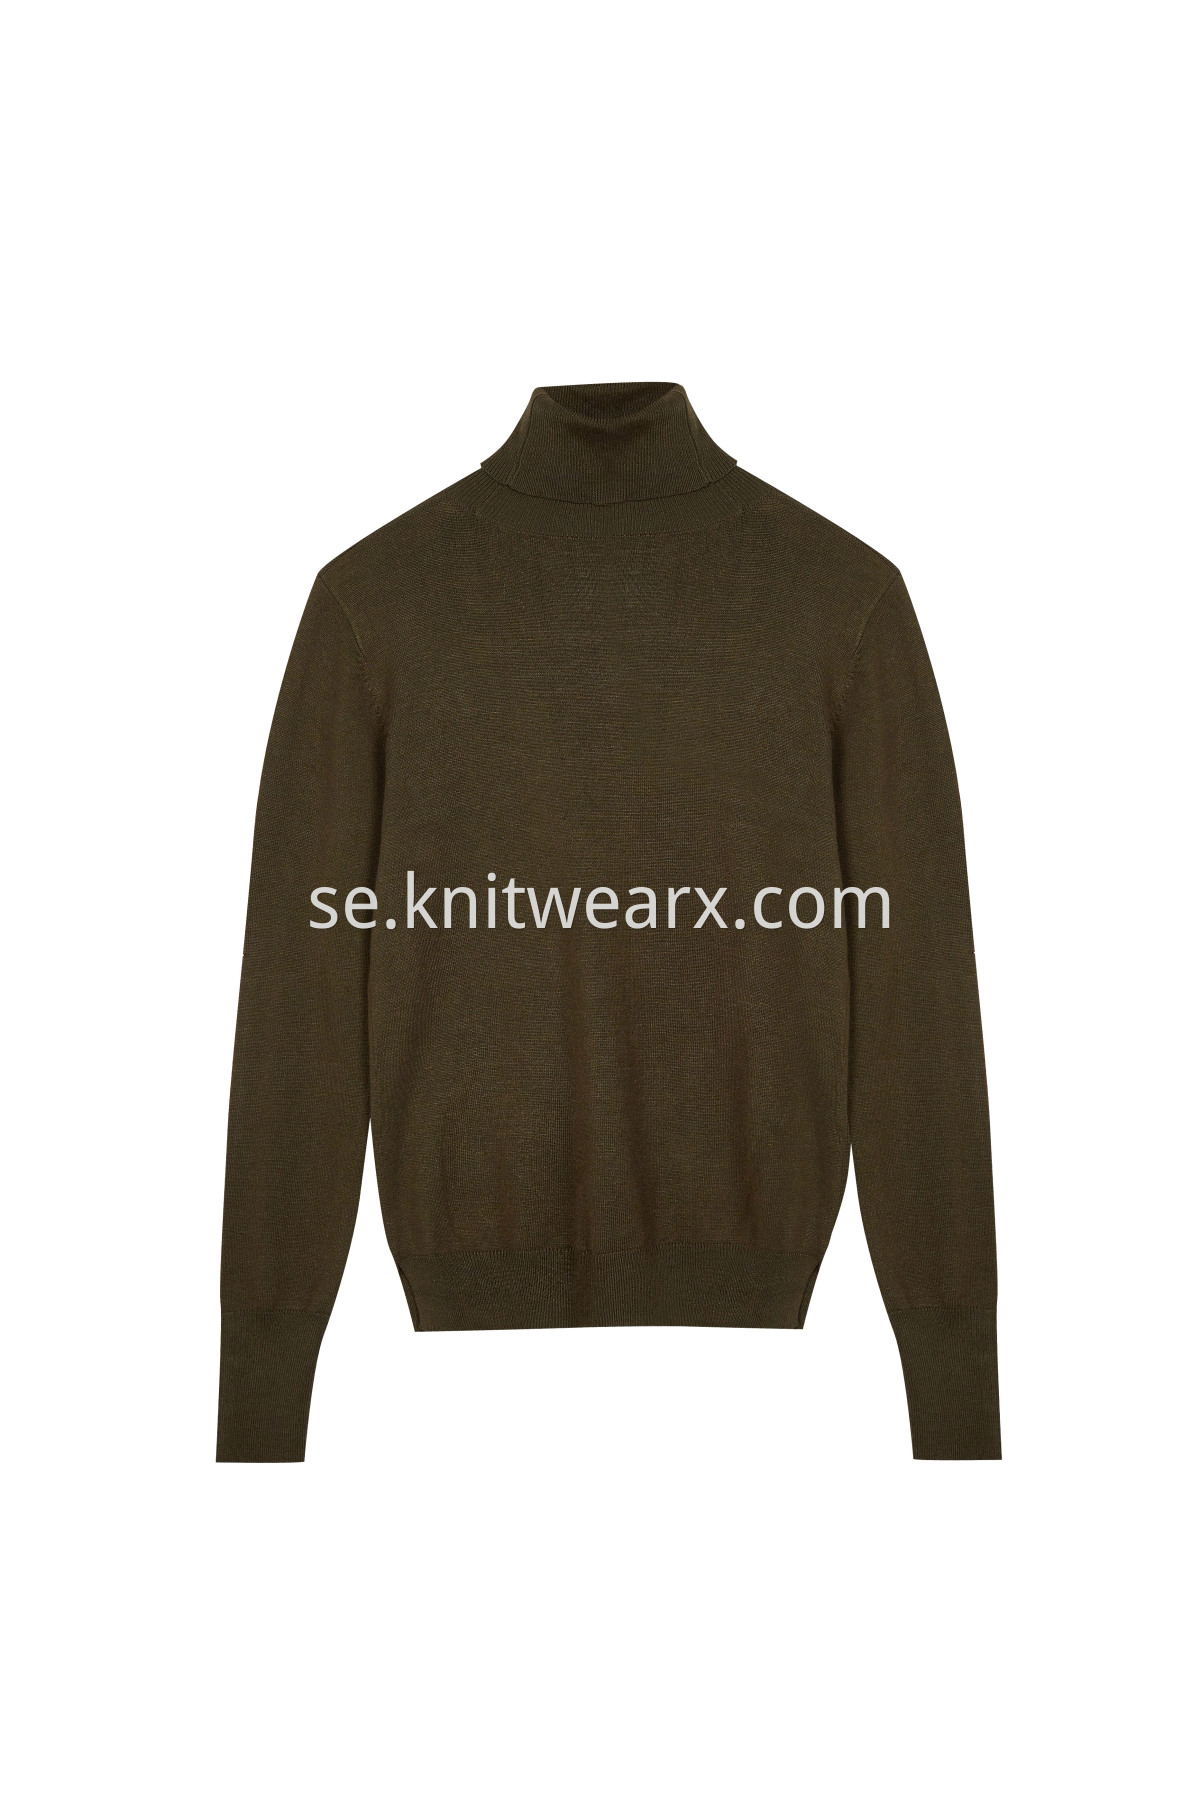 Women's Turtleneck Long Sleeve Sweaters Pullover